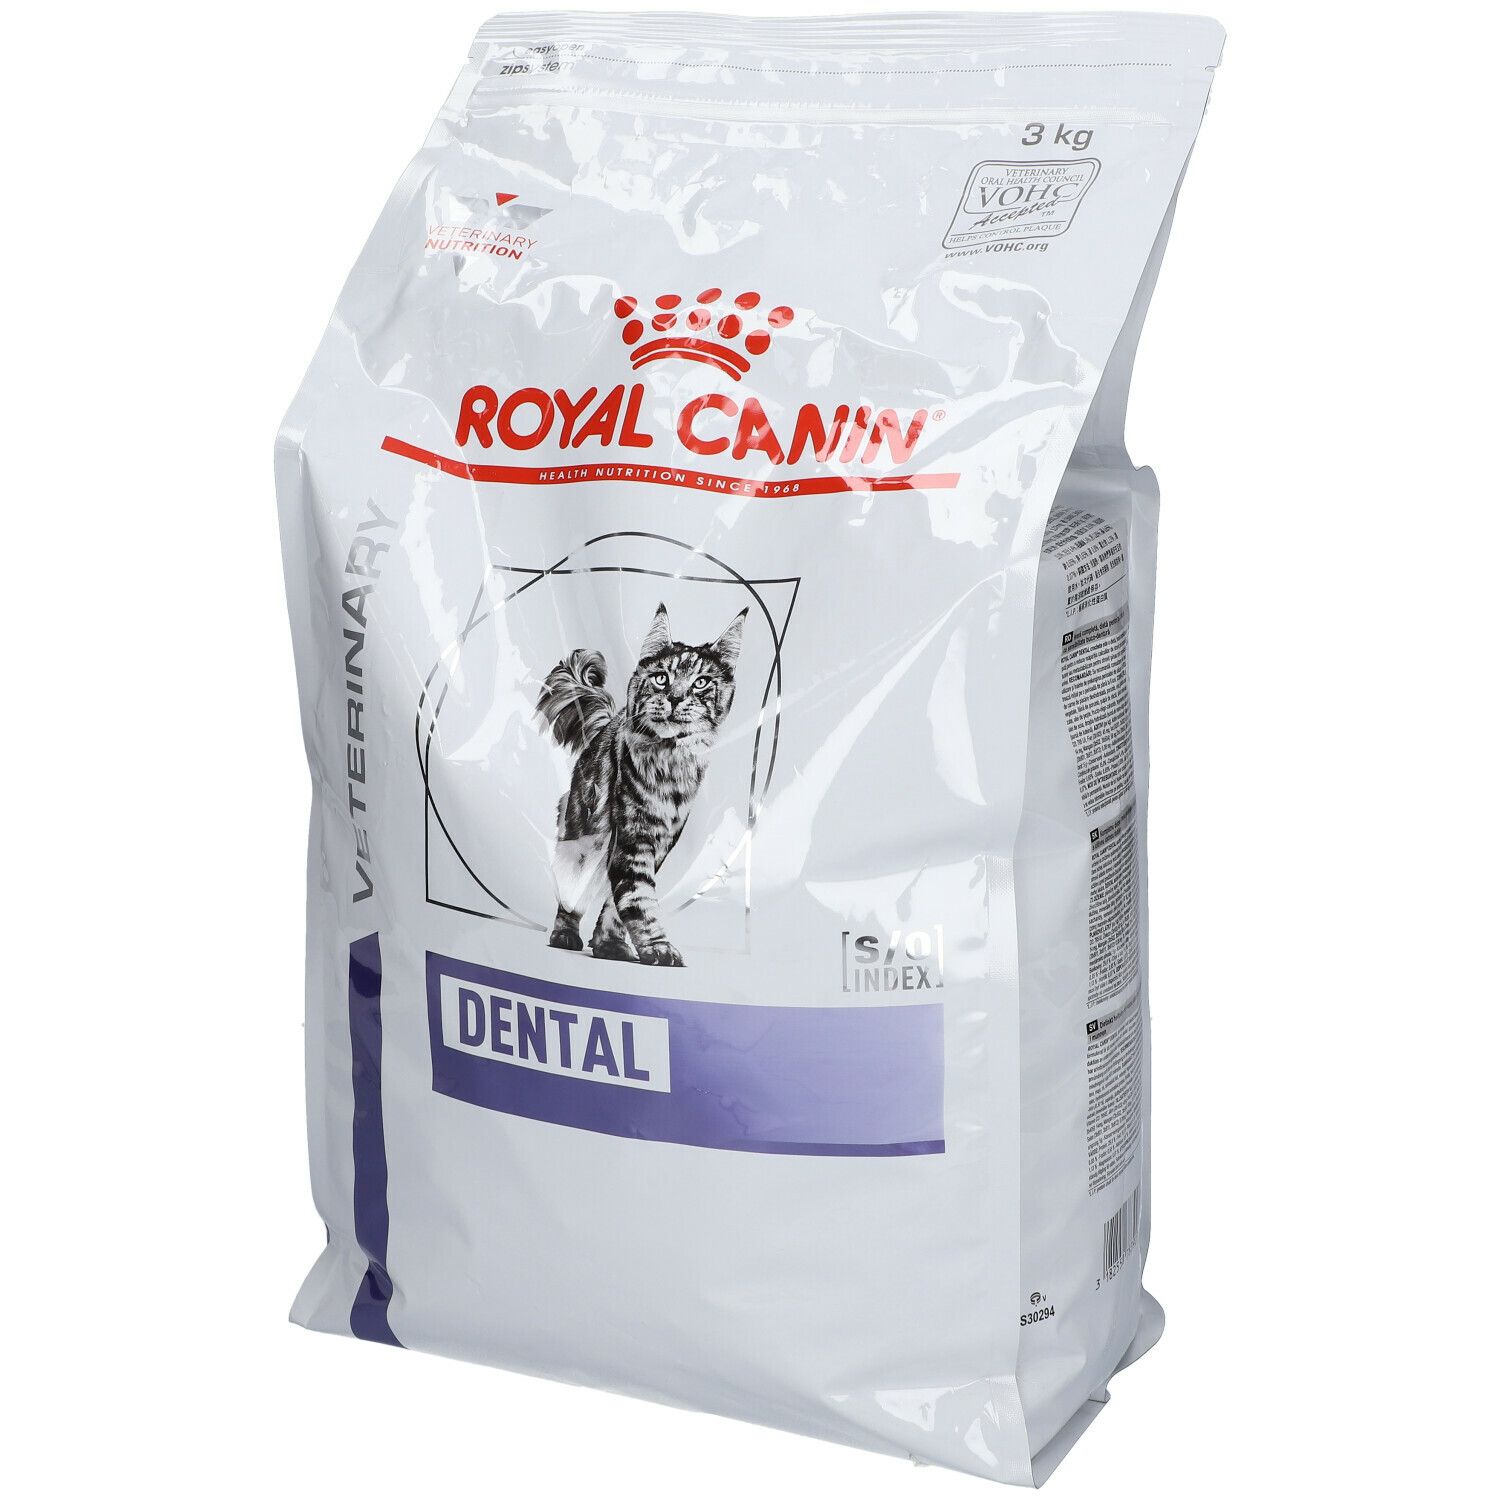 Royal Canin® Dental